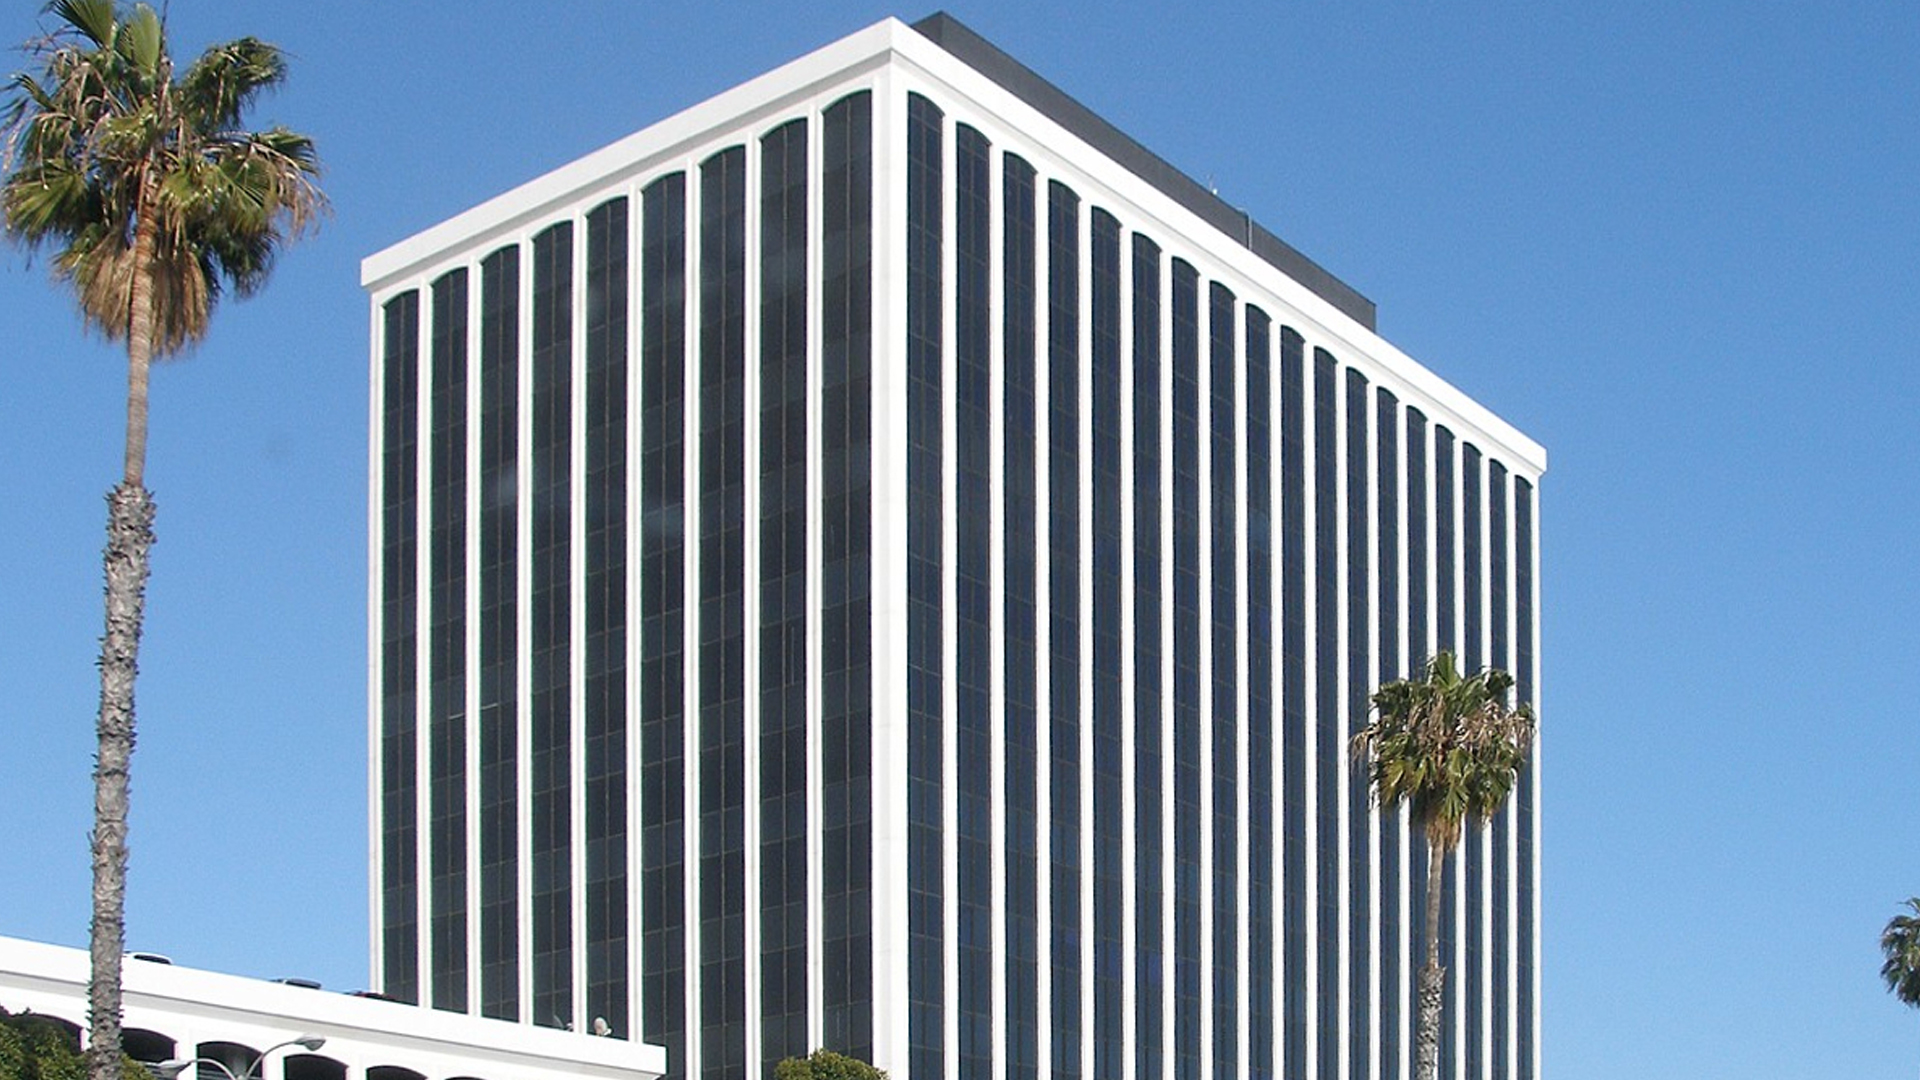 ICANN's headquarters